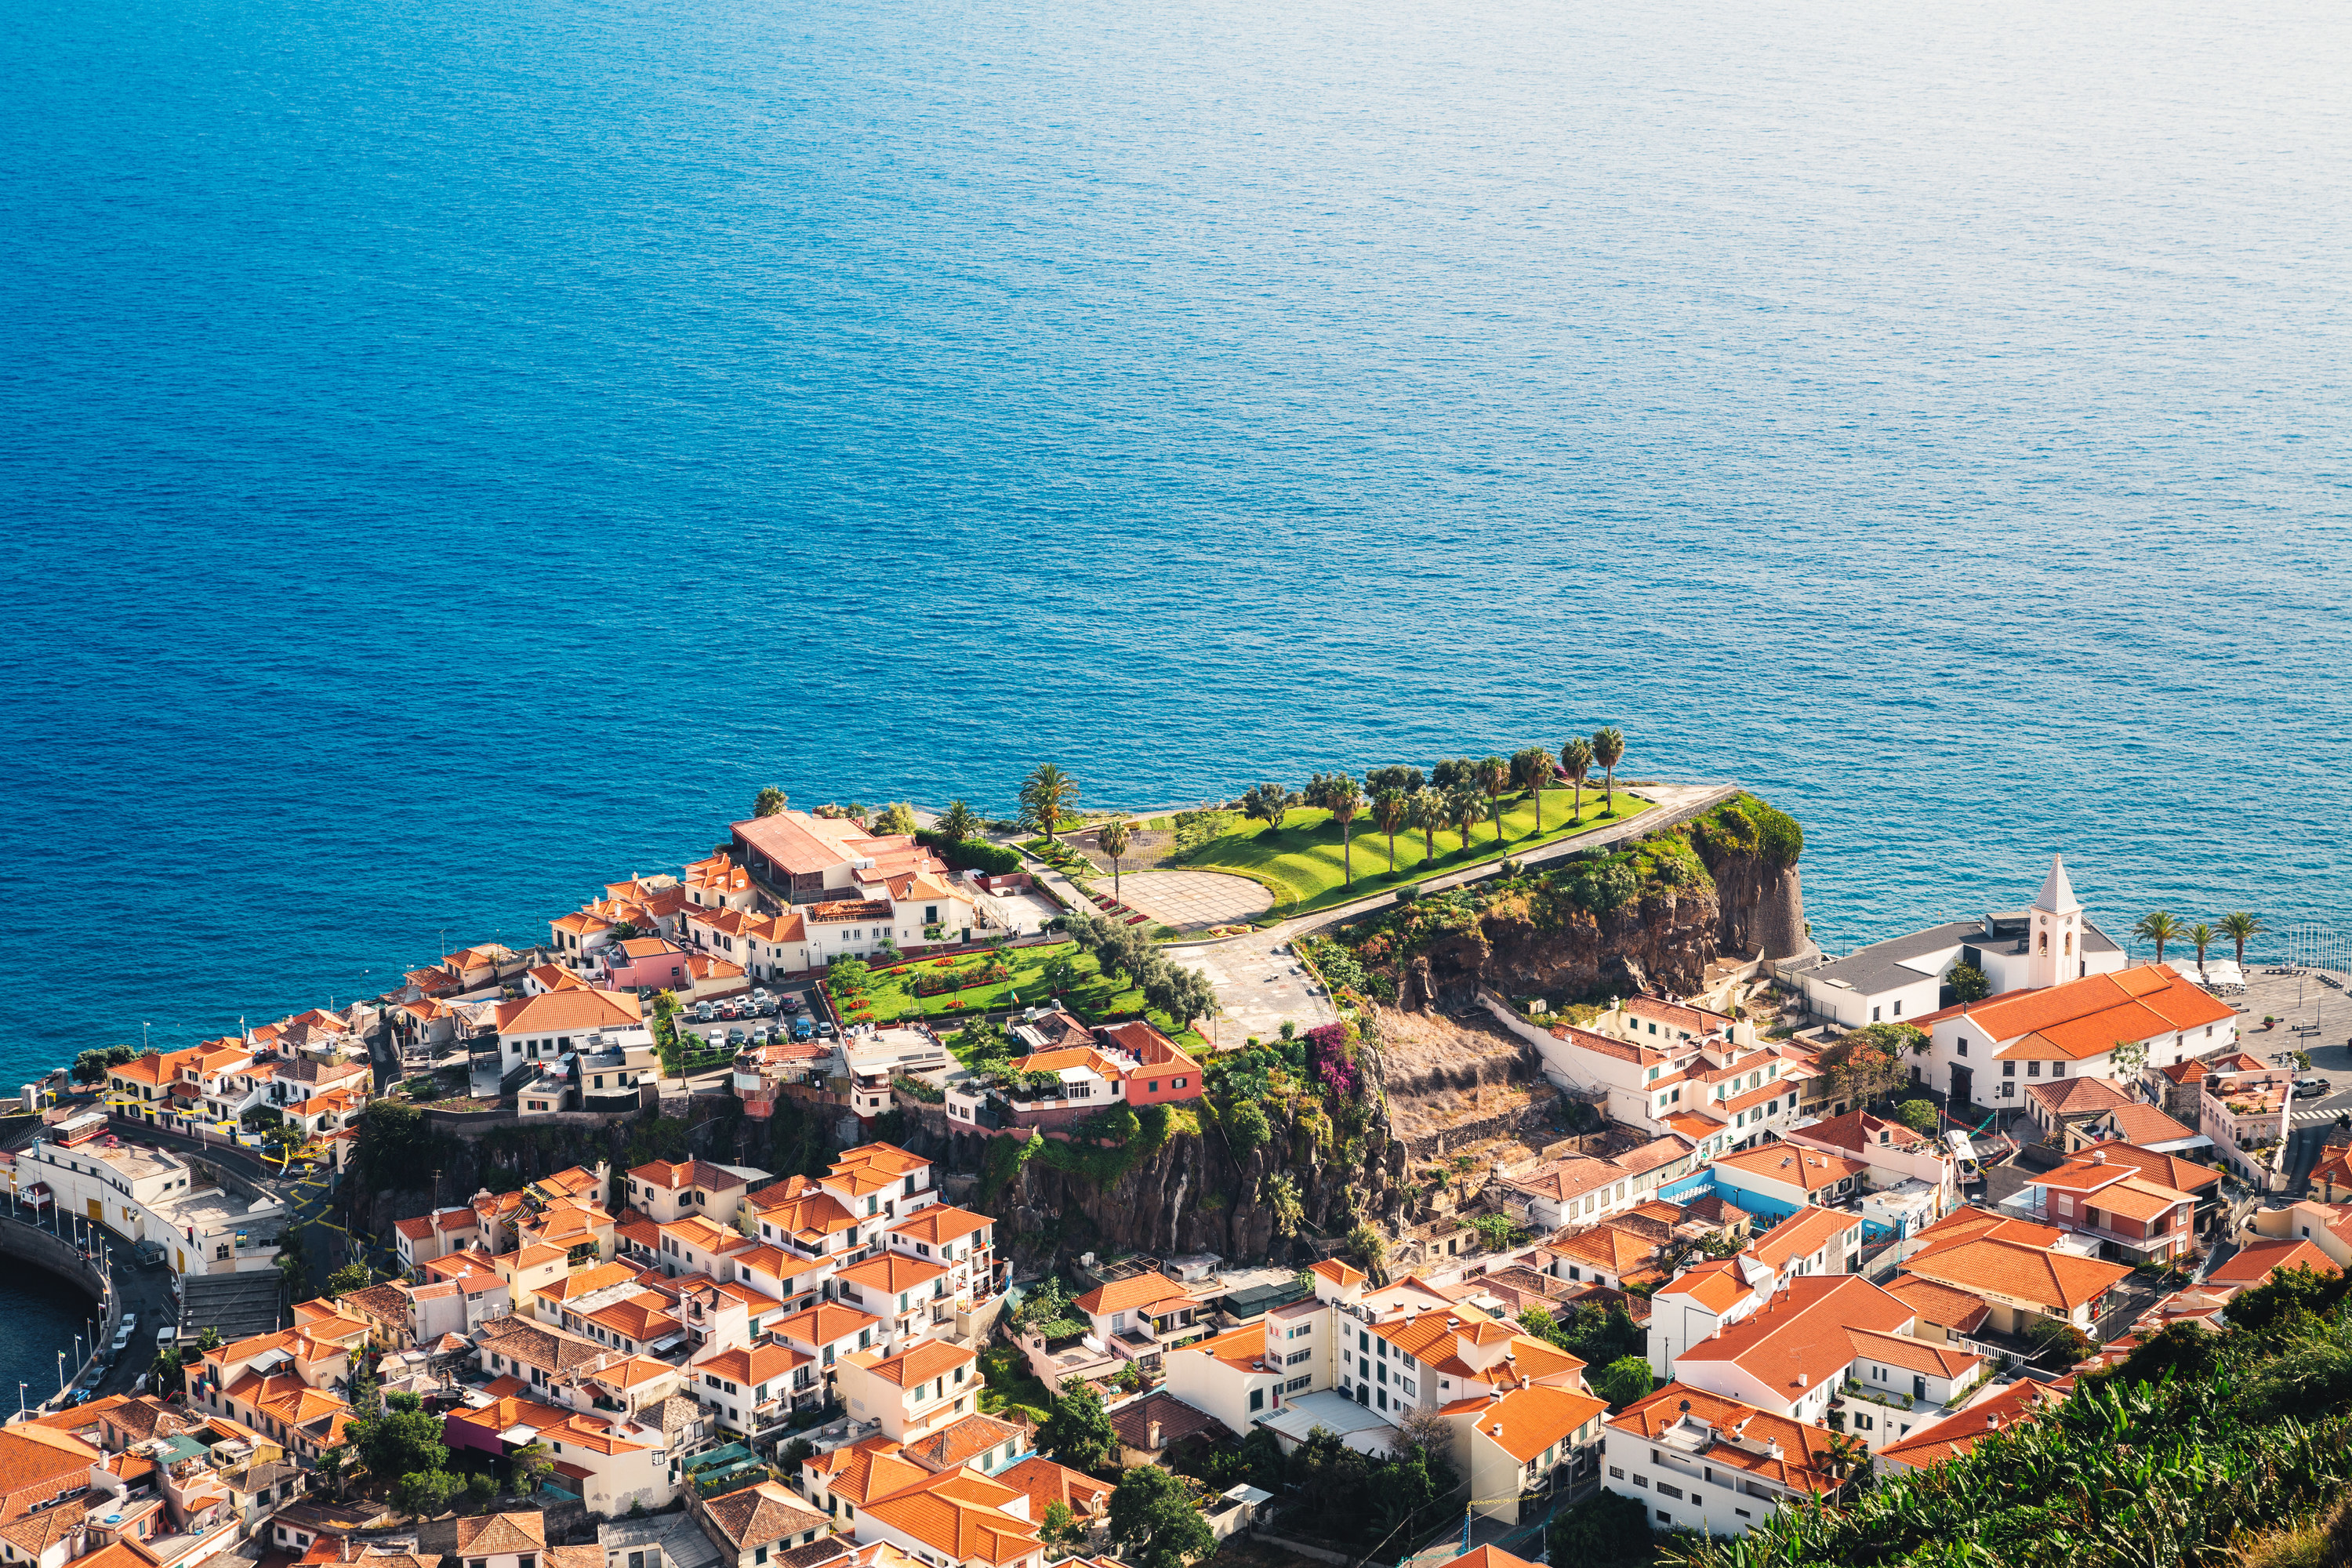 Camara De Lobos village On Madeira island.